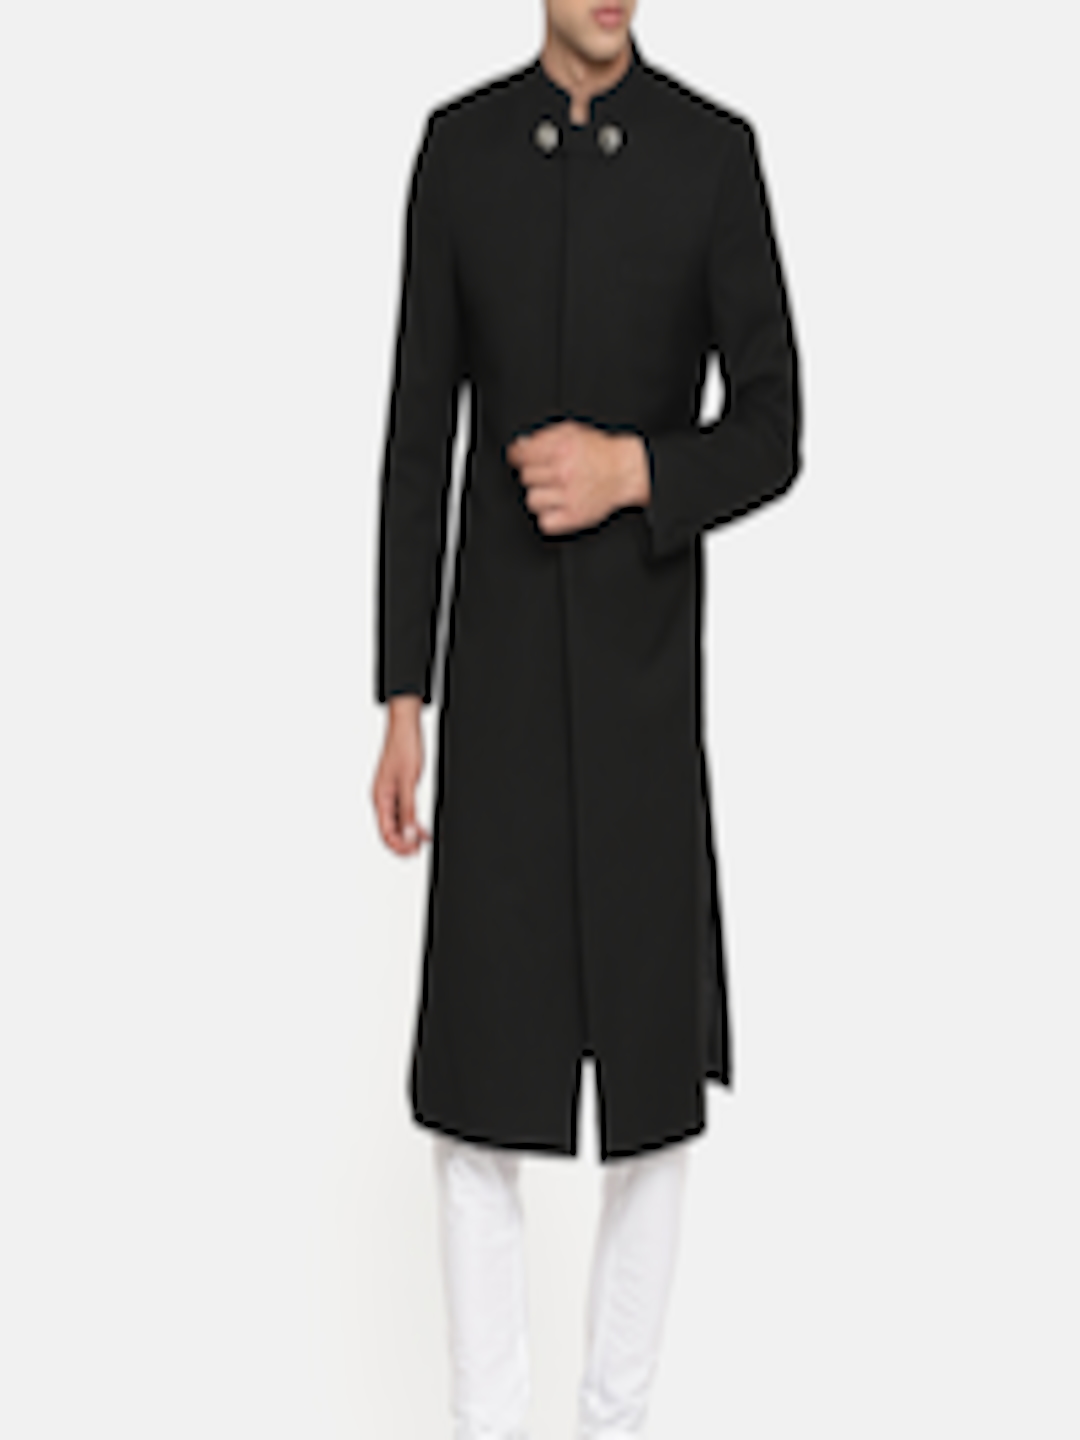 Buy SUITLTD Black & White Solid Sherwani - Sherwani for Men 6817177 ...